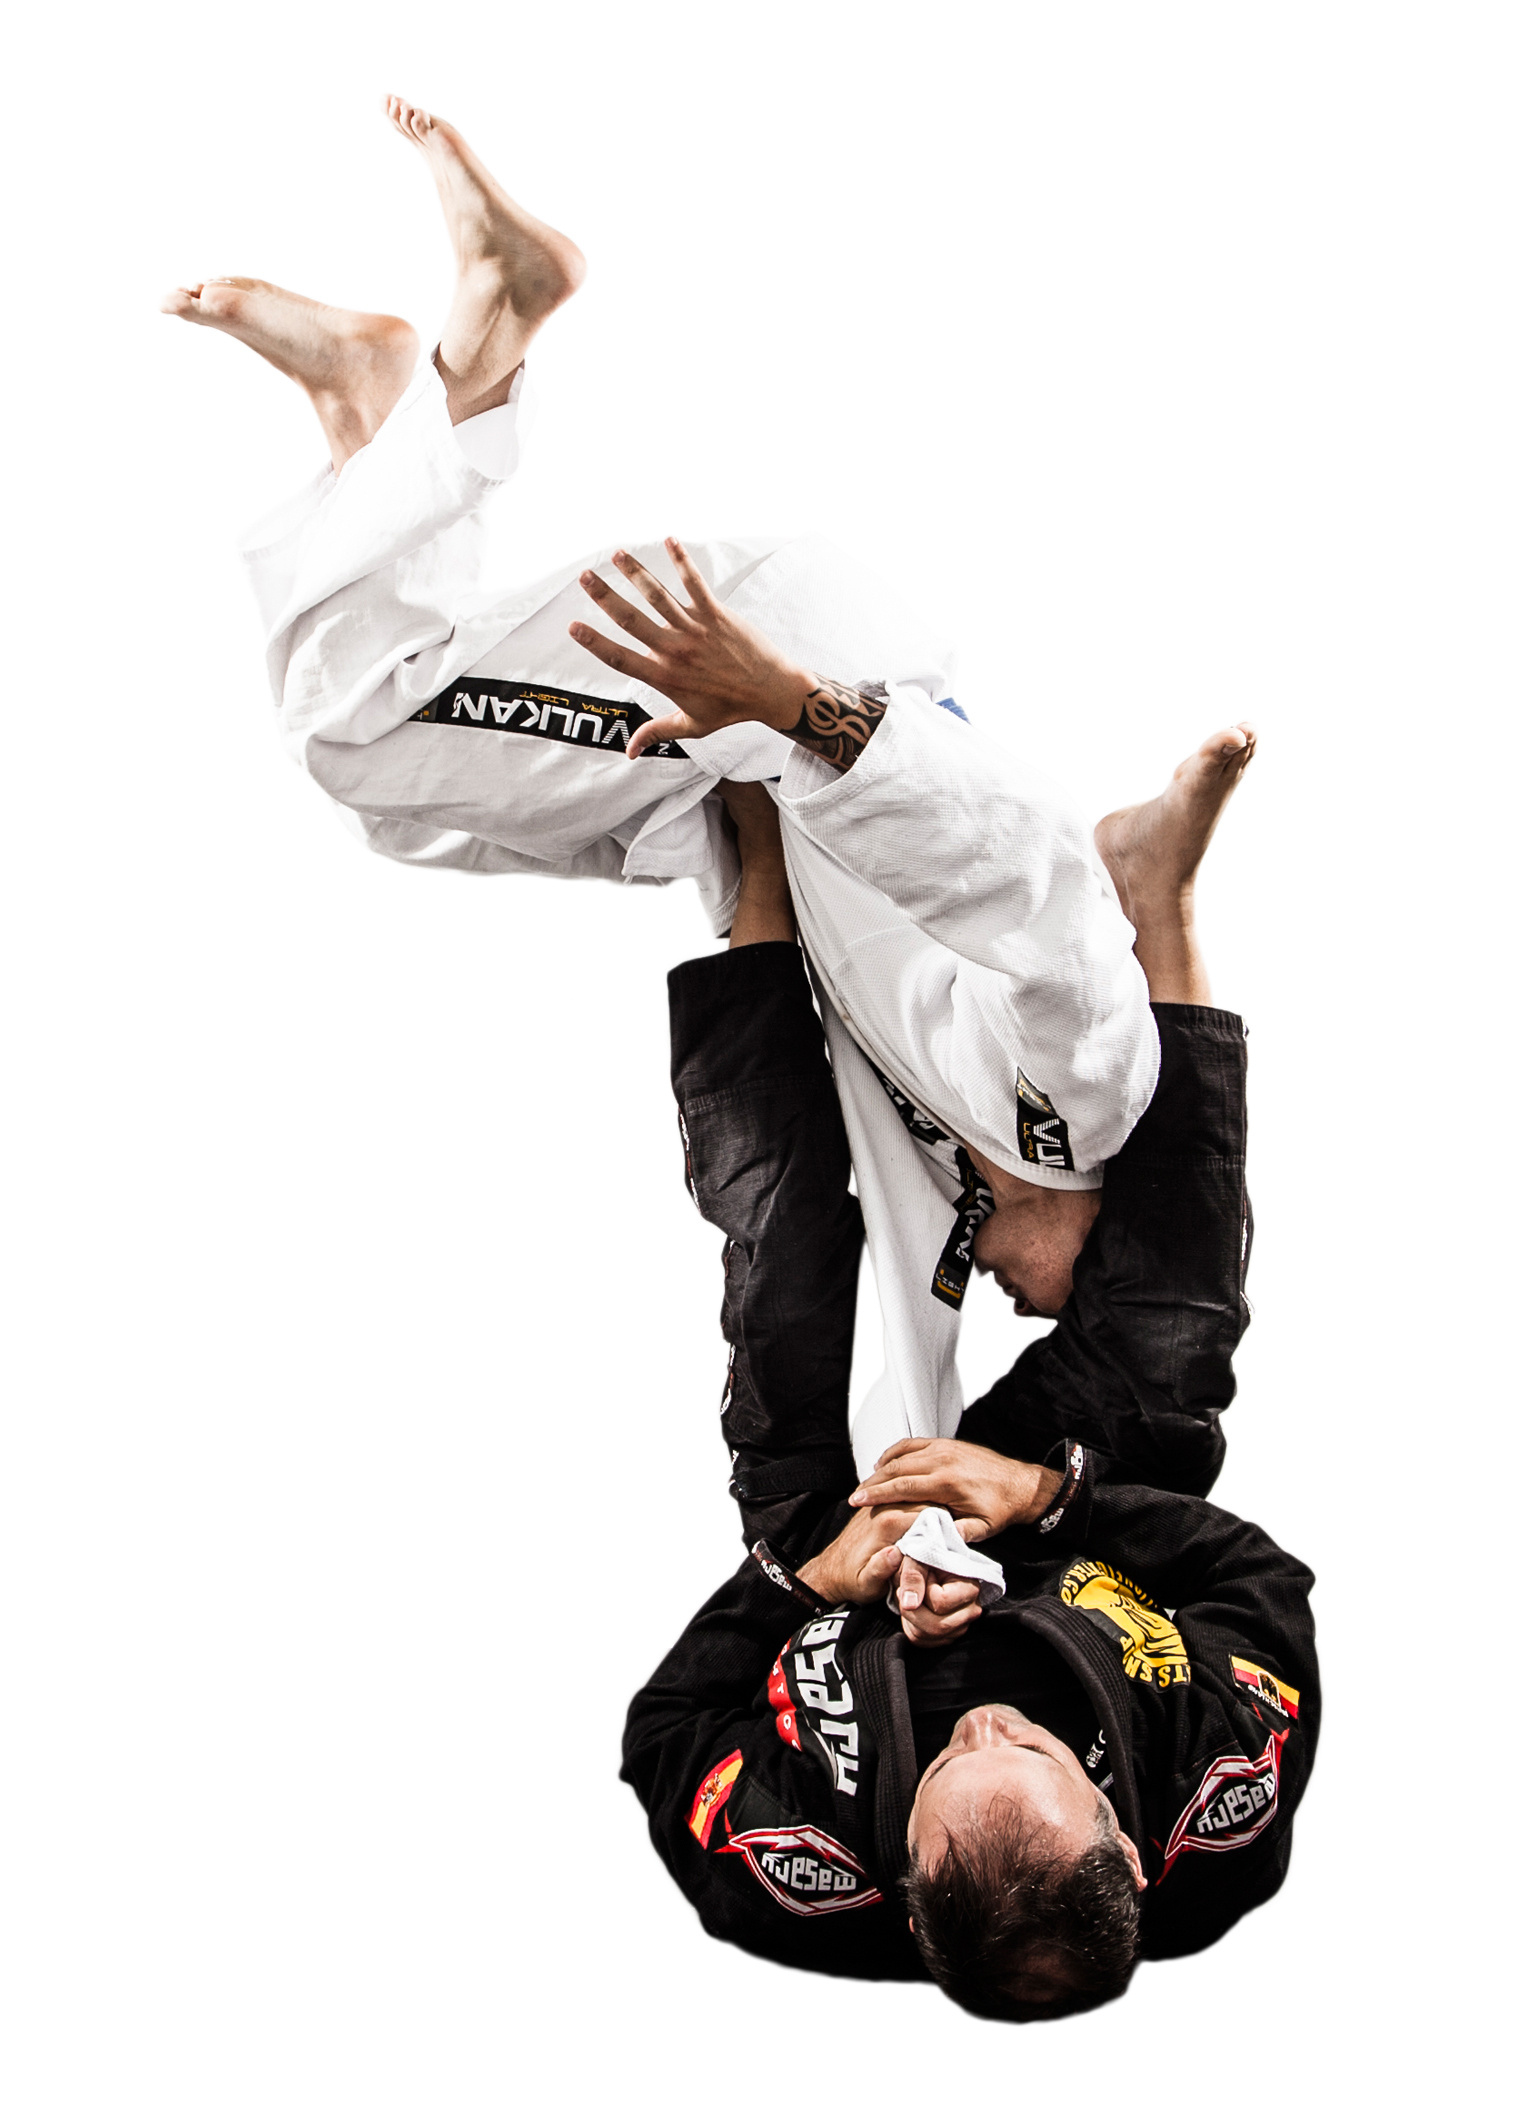 Brazilian Jiu-jitsu: Kampfsport-MKK, Bringing an opponent to the ground, Range of takedown techniques. 1540x2130 HD Wallpaper.